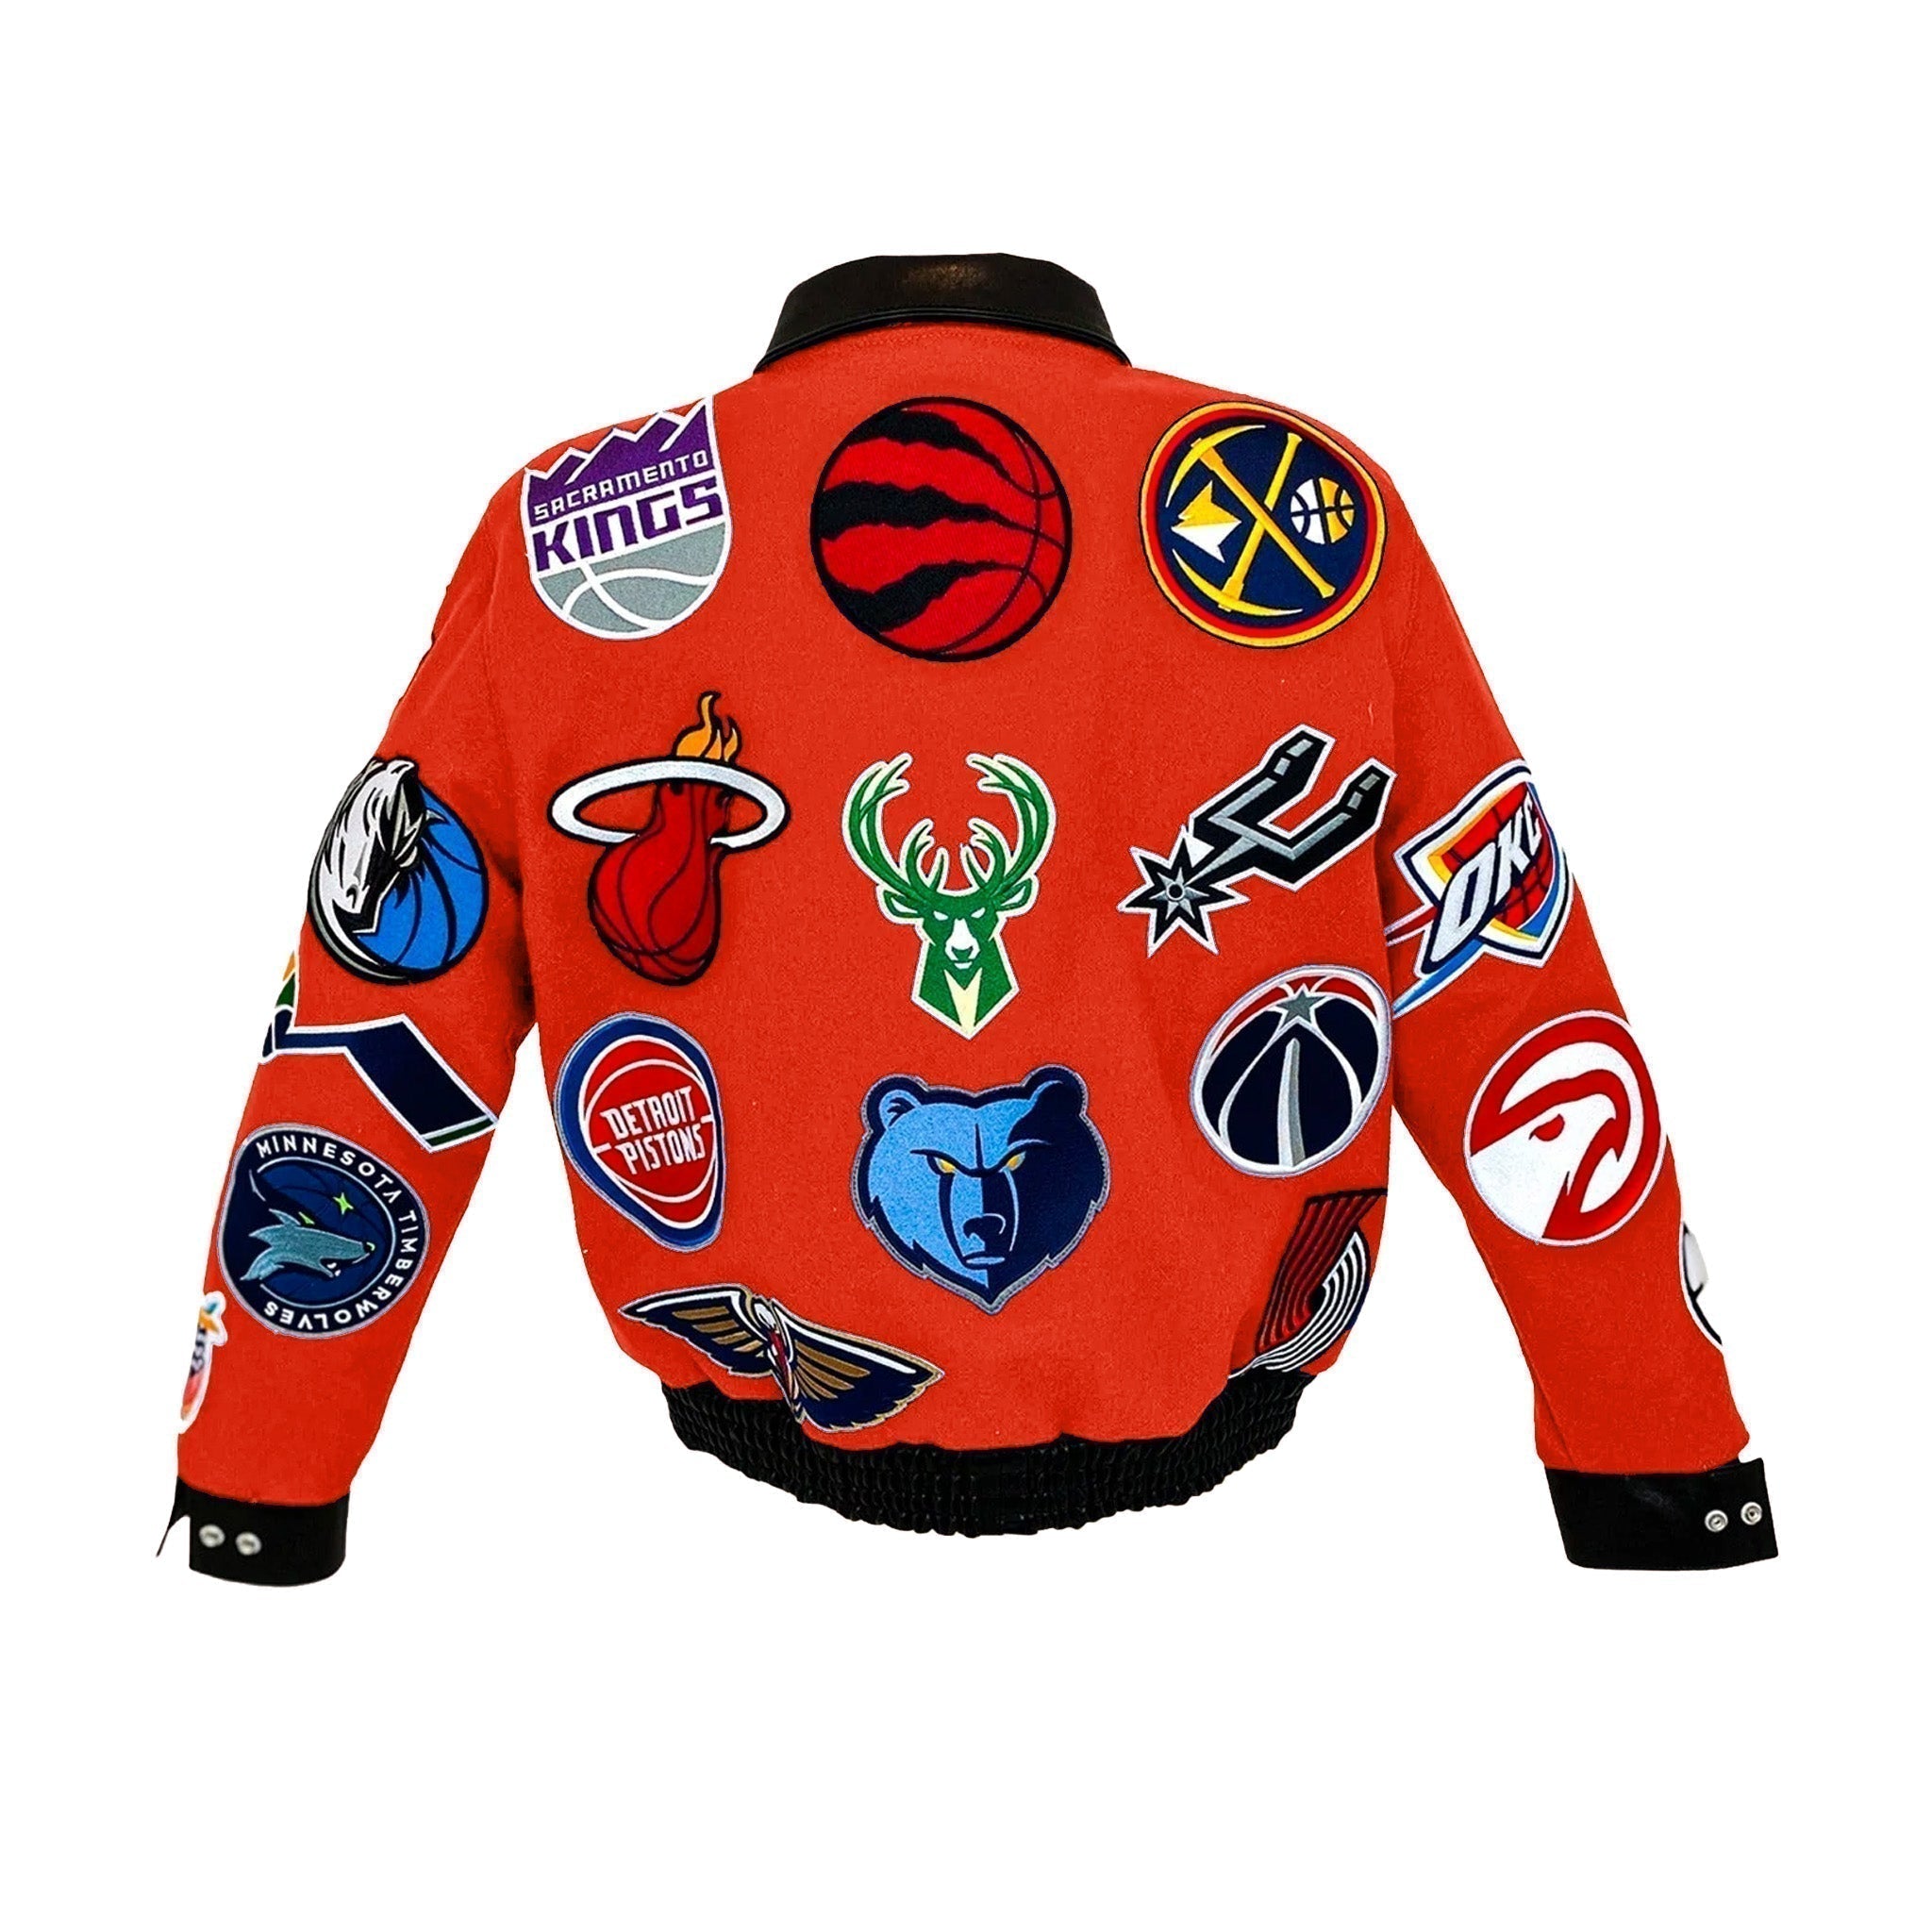 NBA Collage Wool & Leather Jacket Orange